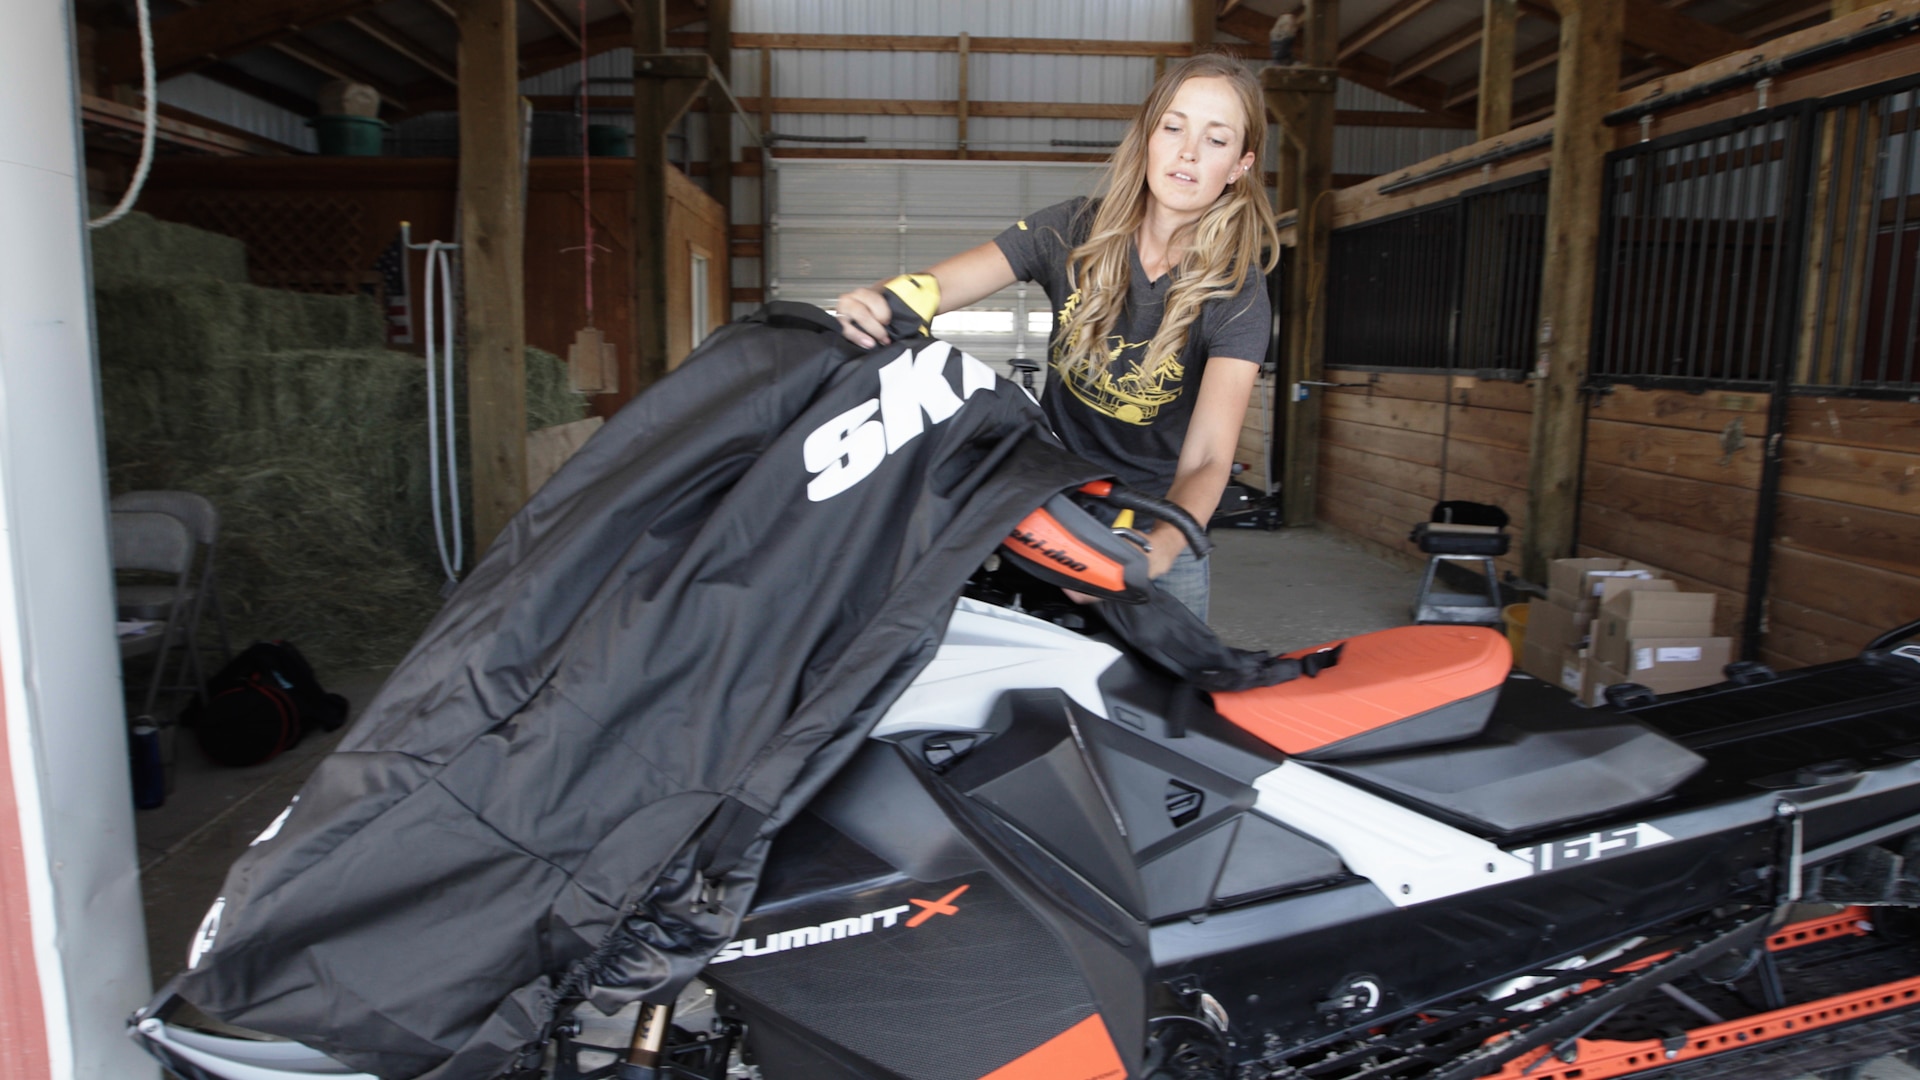 Stefanie Dean covering her Ski-Doo snowmobile for Summer storage